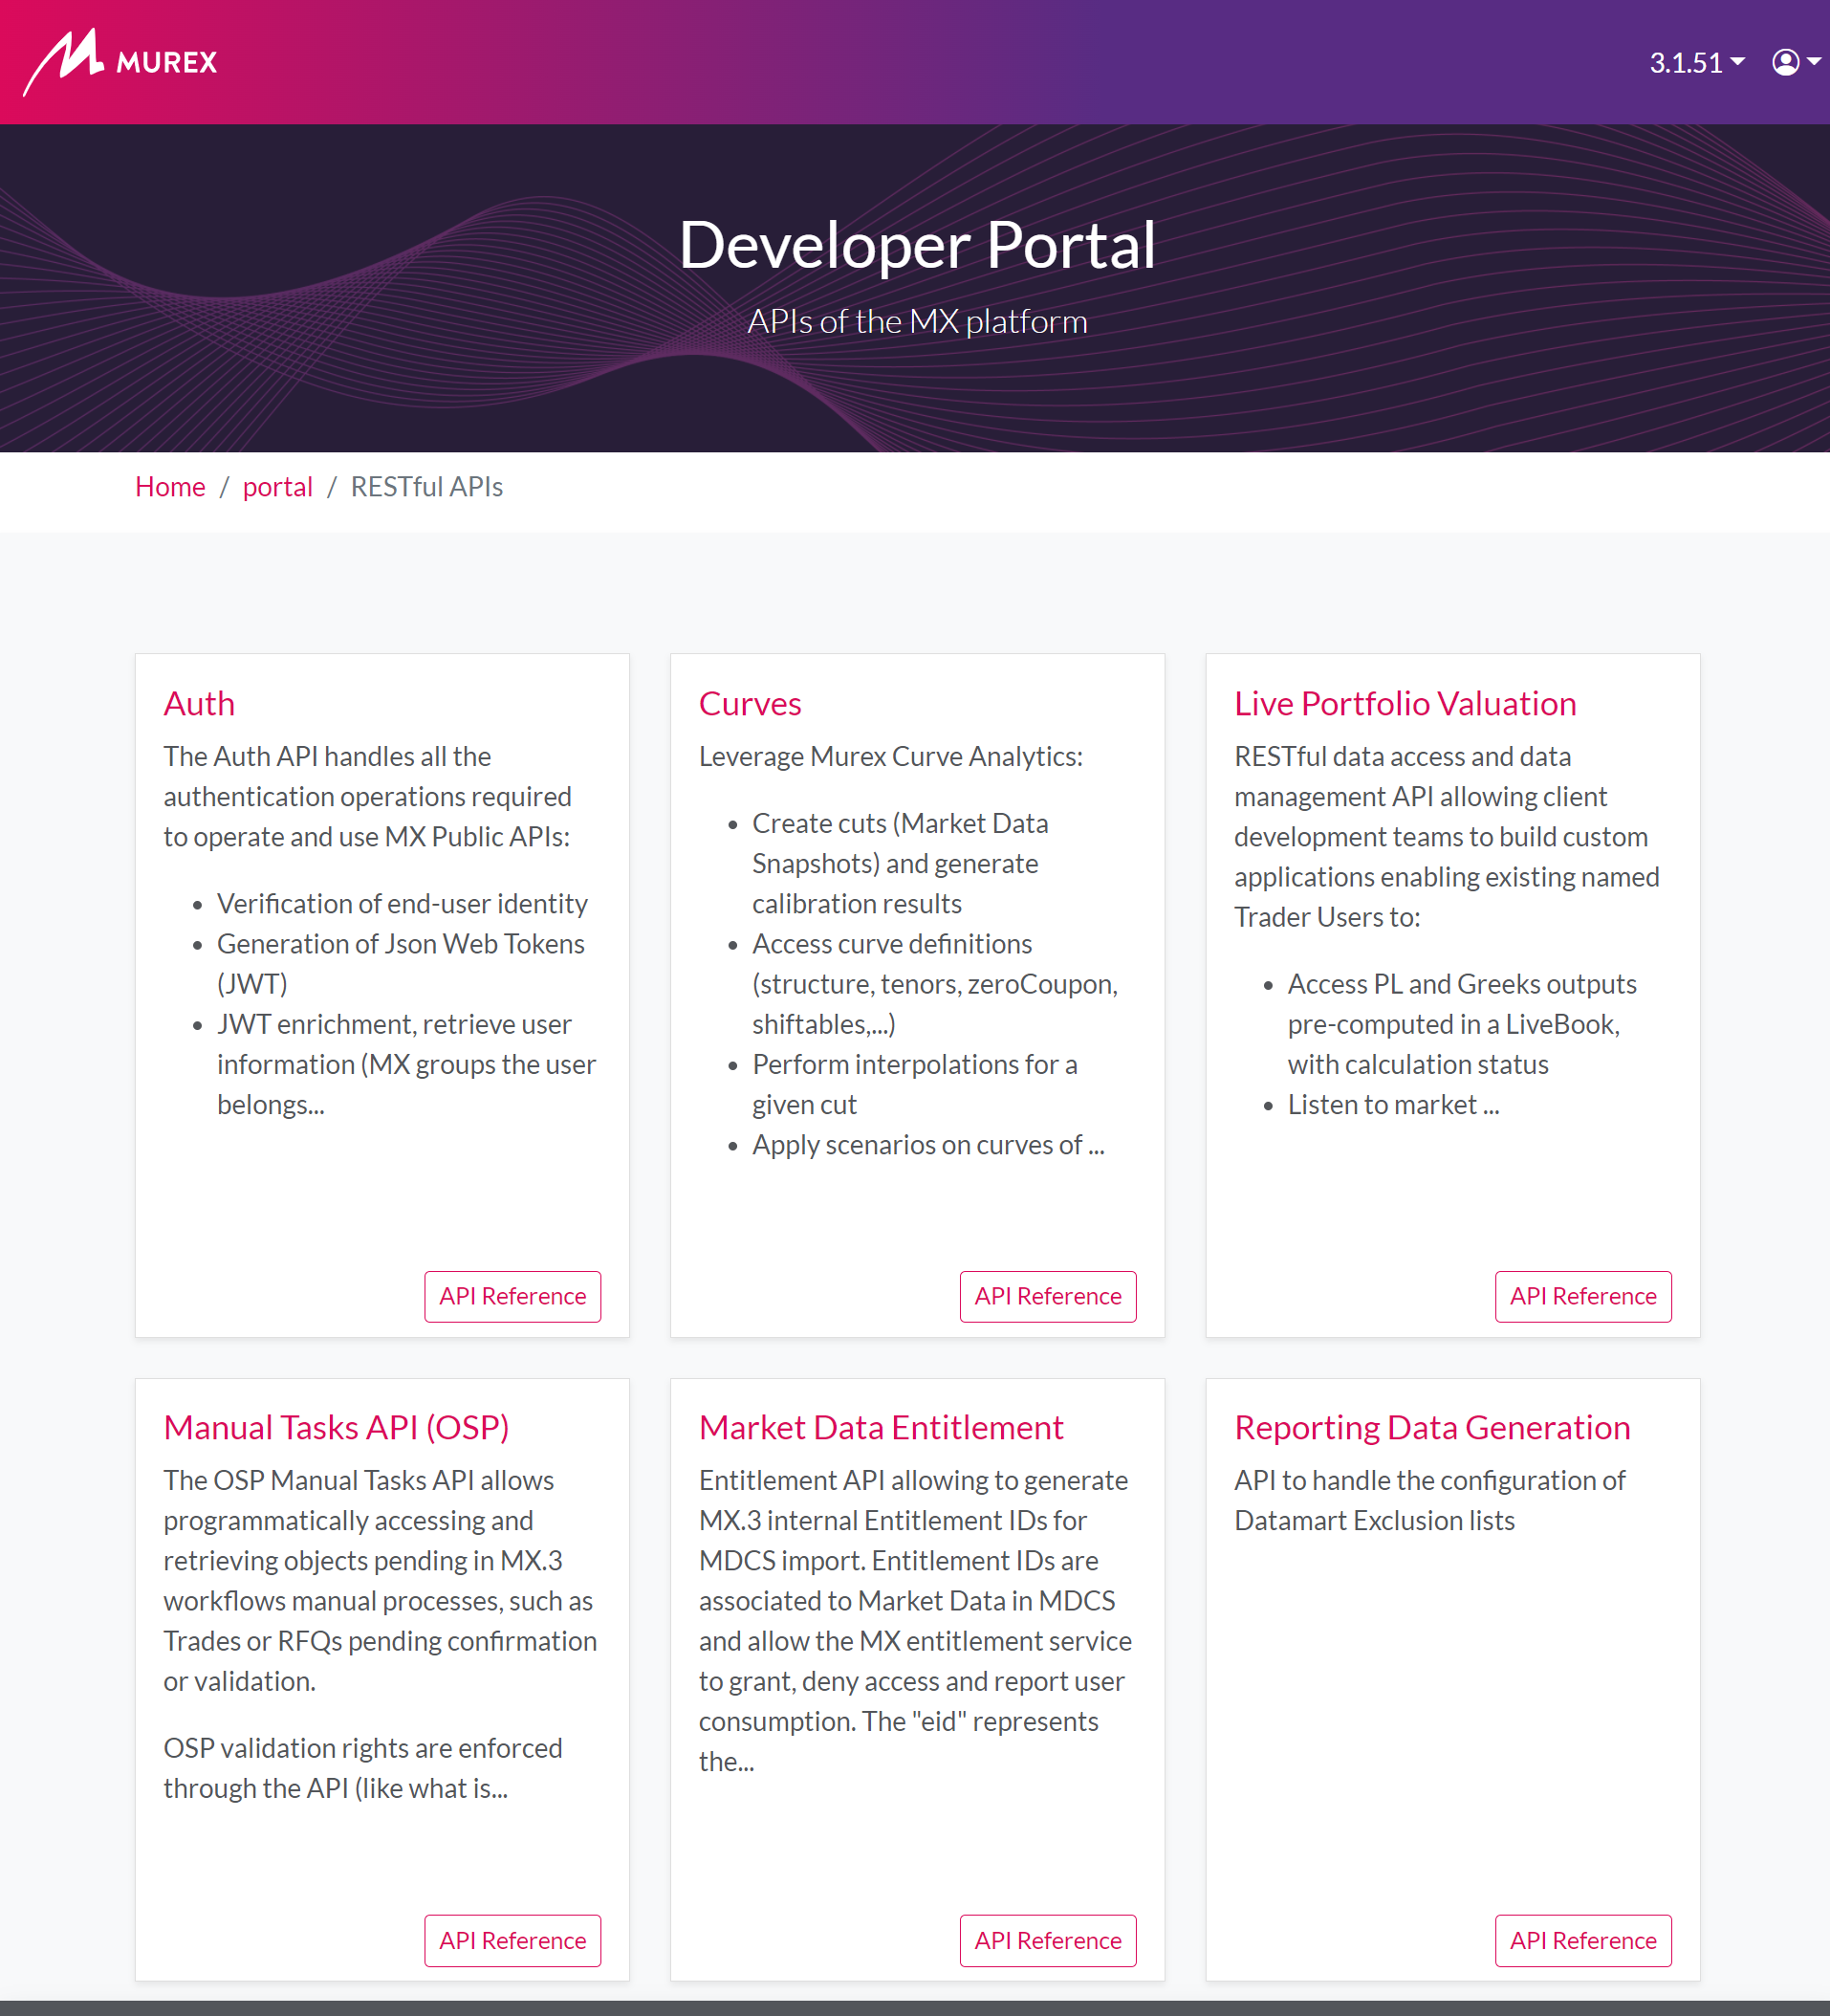 Developer portal, APIs of the MX platform